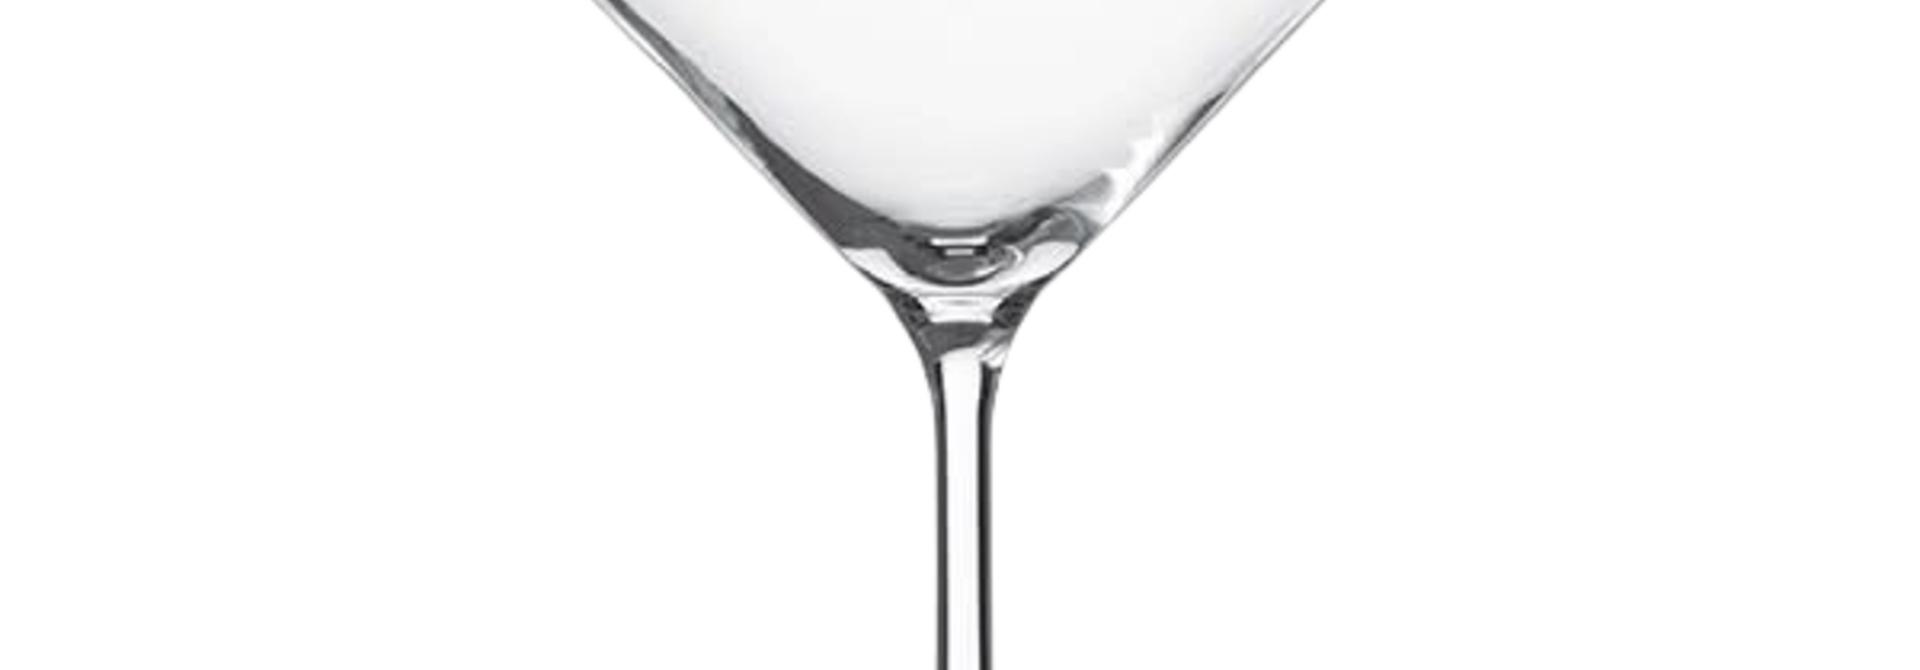 Martini | The EOD Signature Collection, Glass - 11.6 Oz